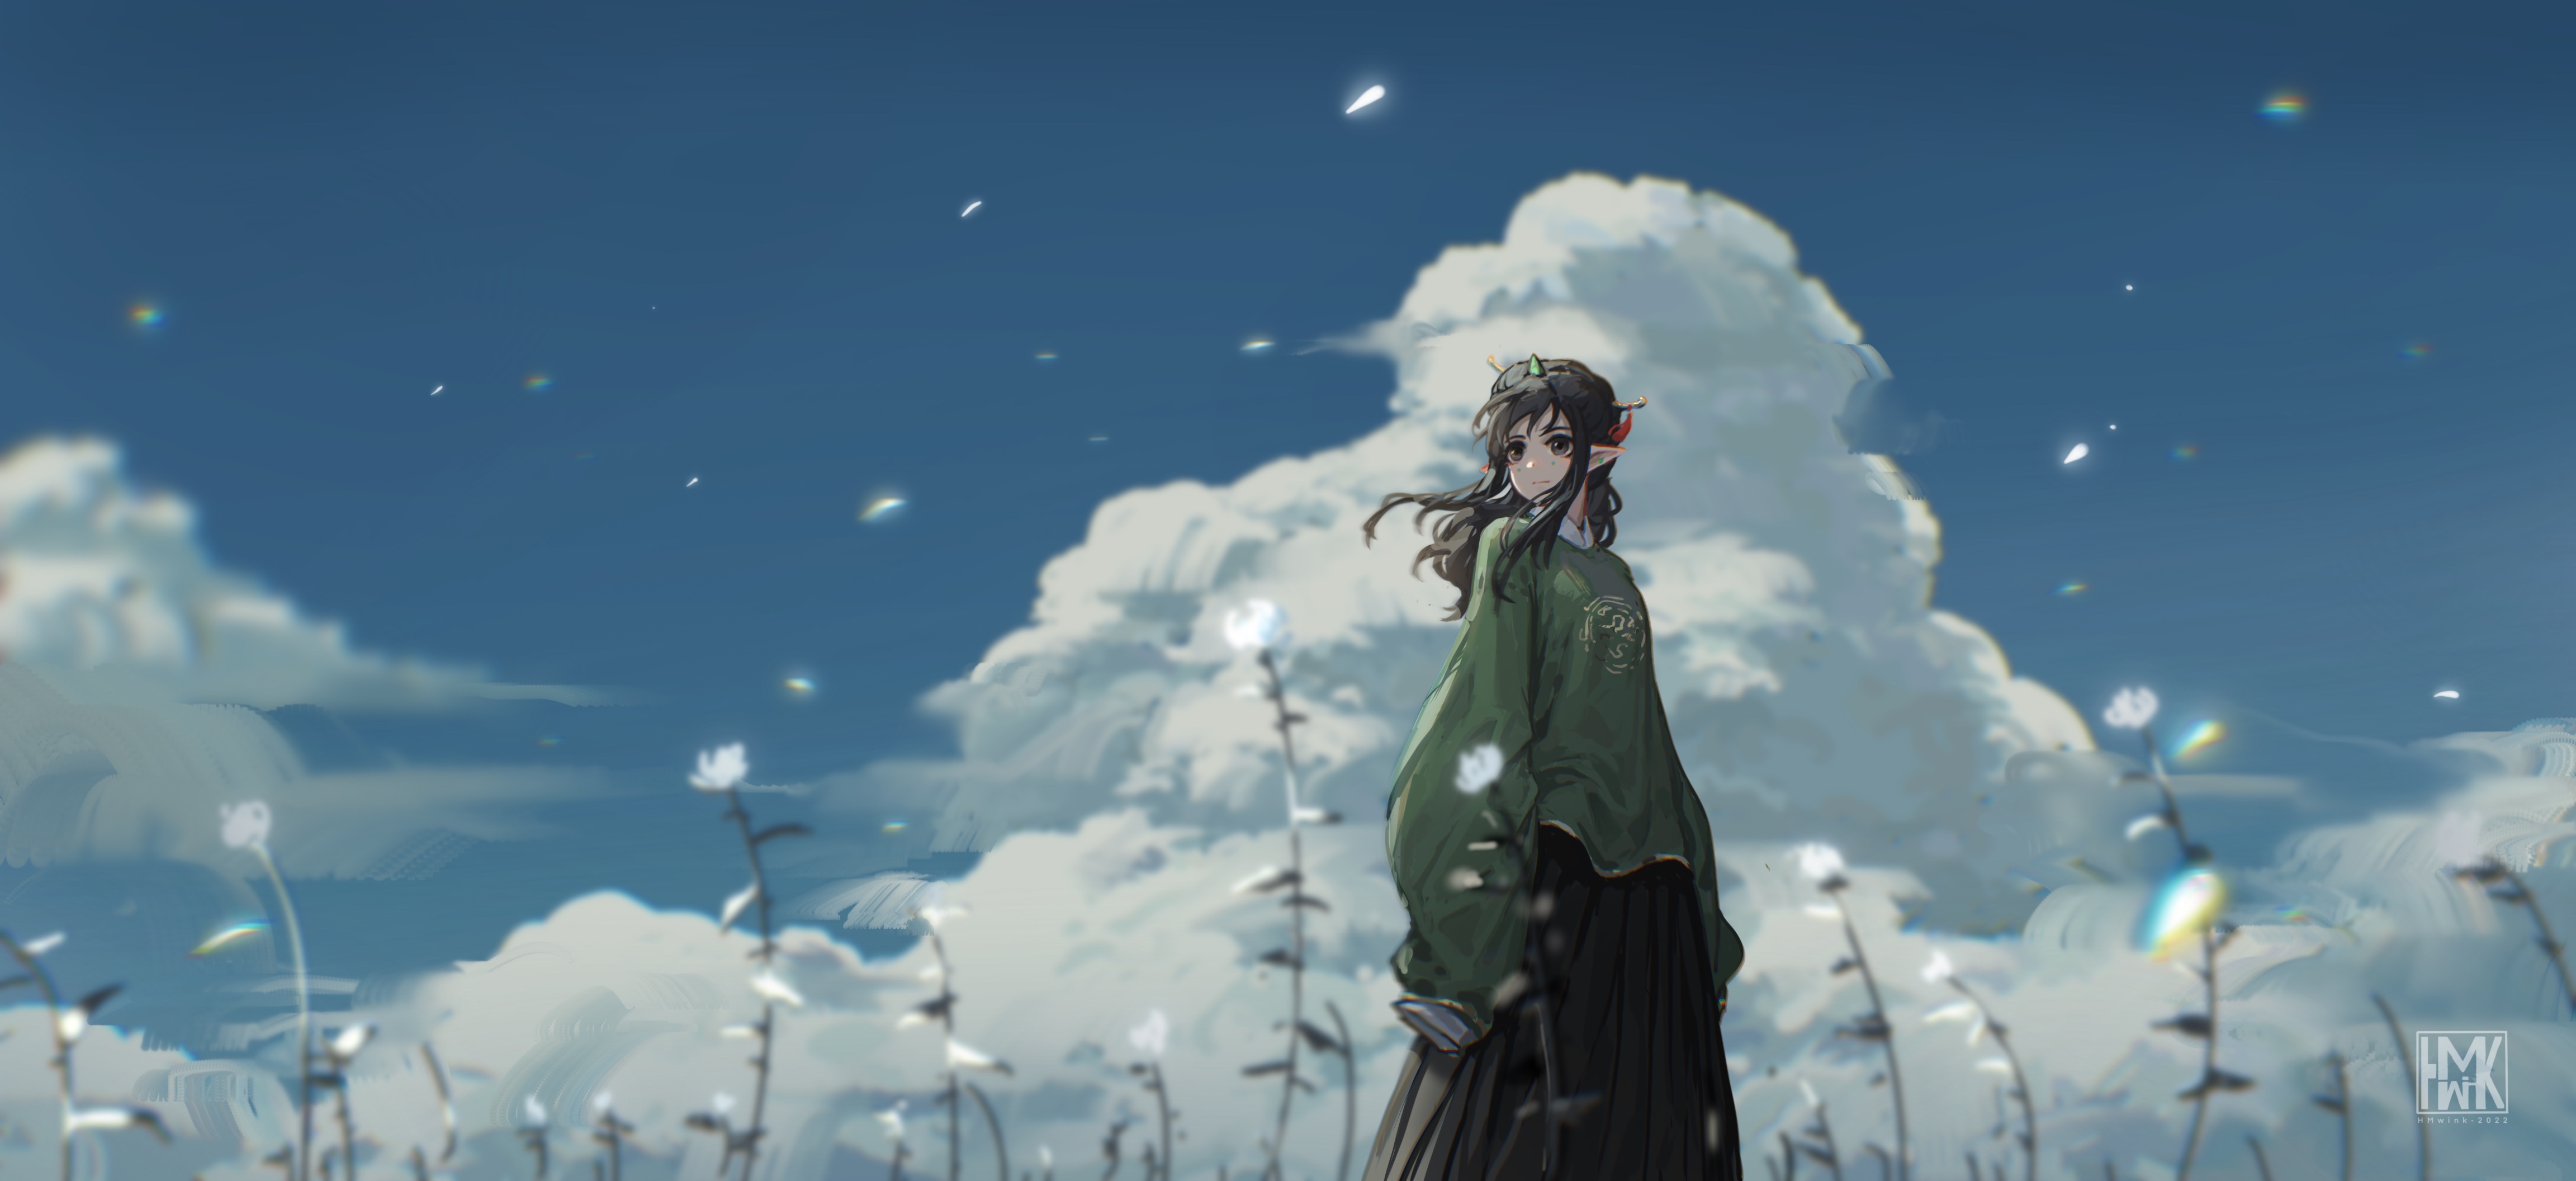 Hua Ming Wink Anime Anime Girls Artwork Hanfu Chinese Clothing Elves Clouds Windy Black Hair Long Ha 4608x2112